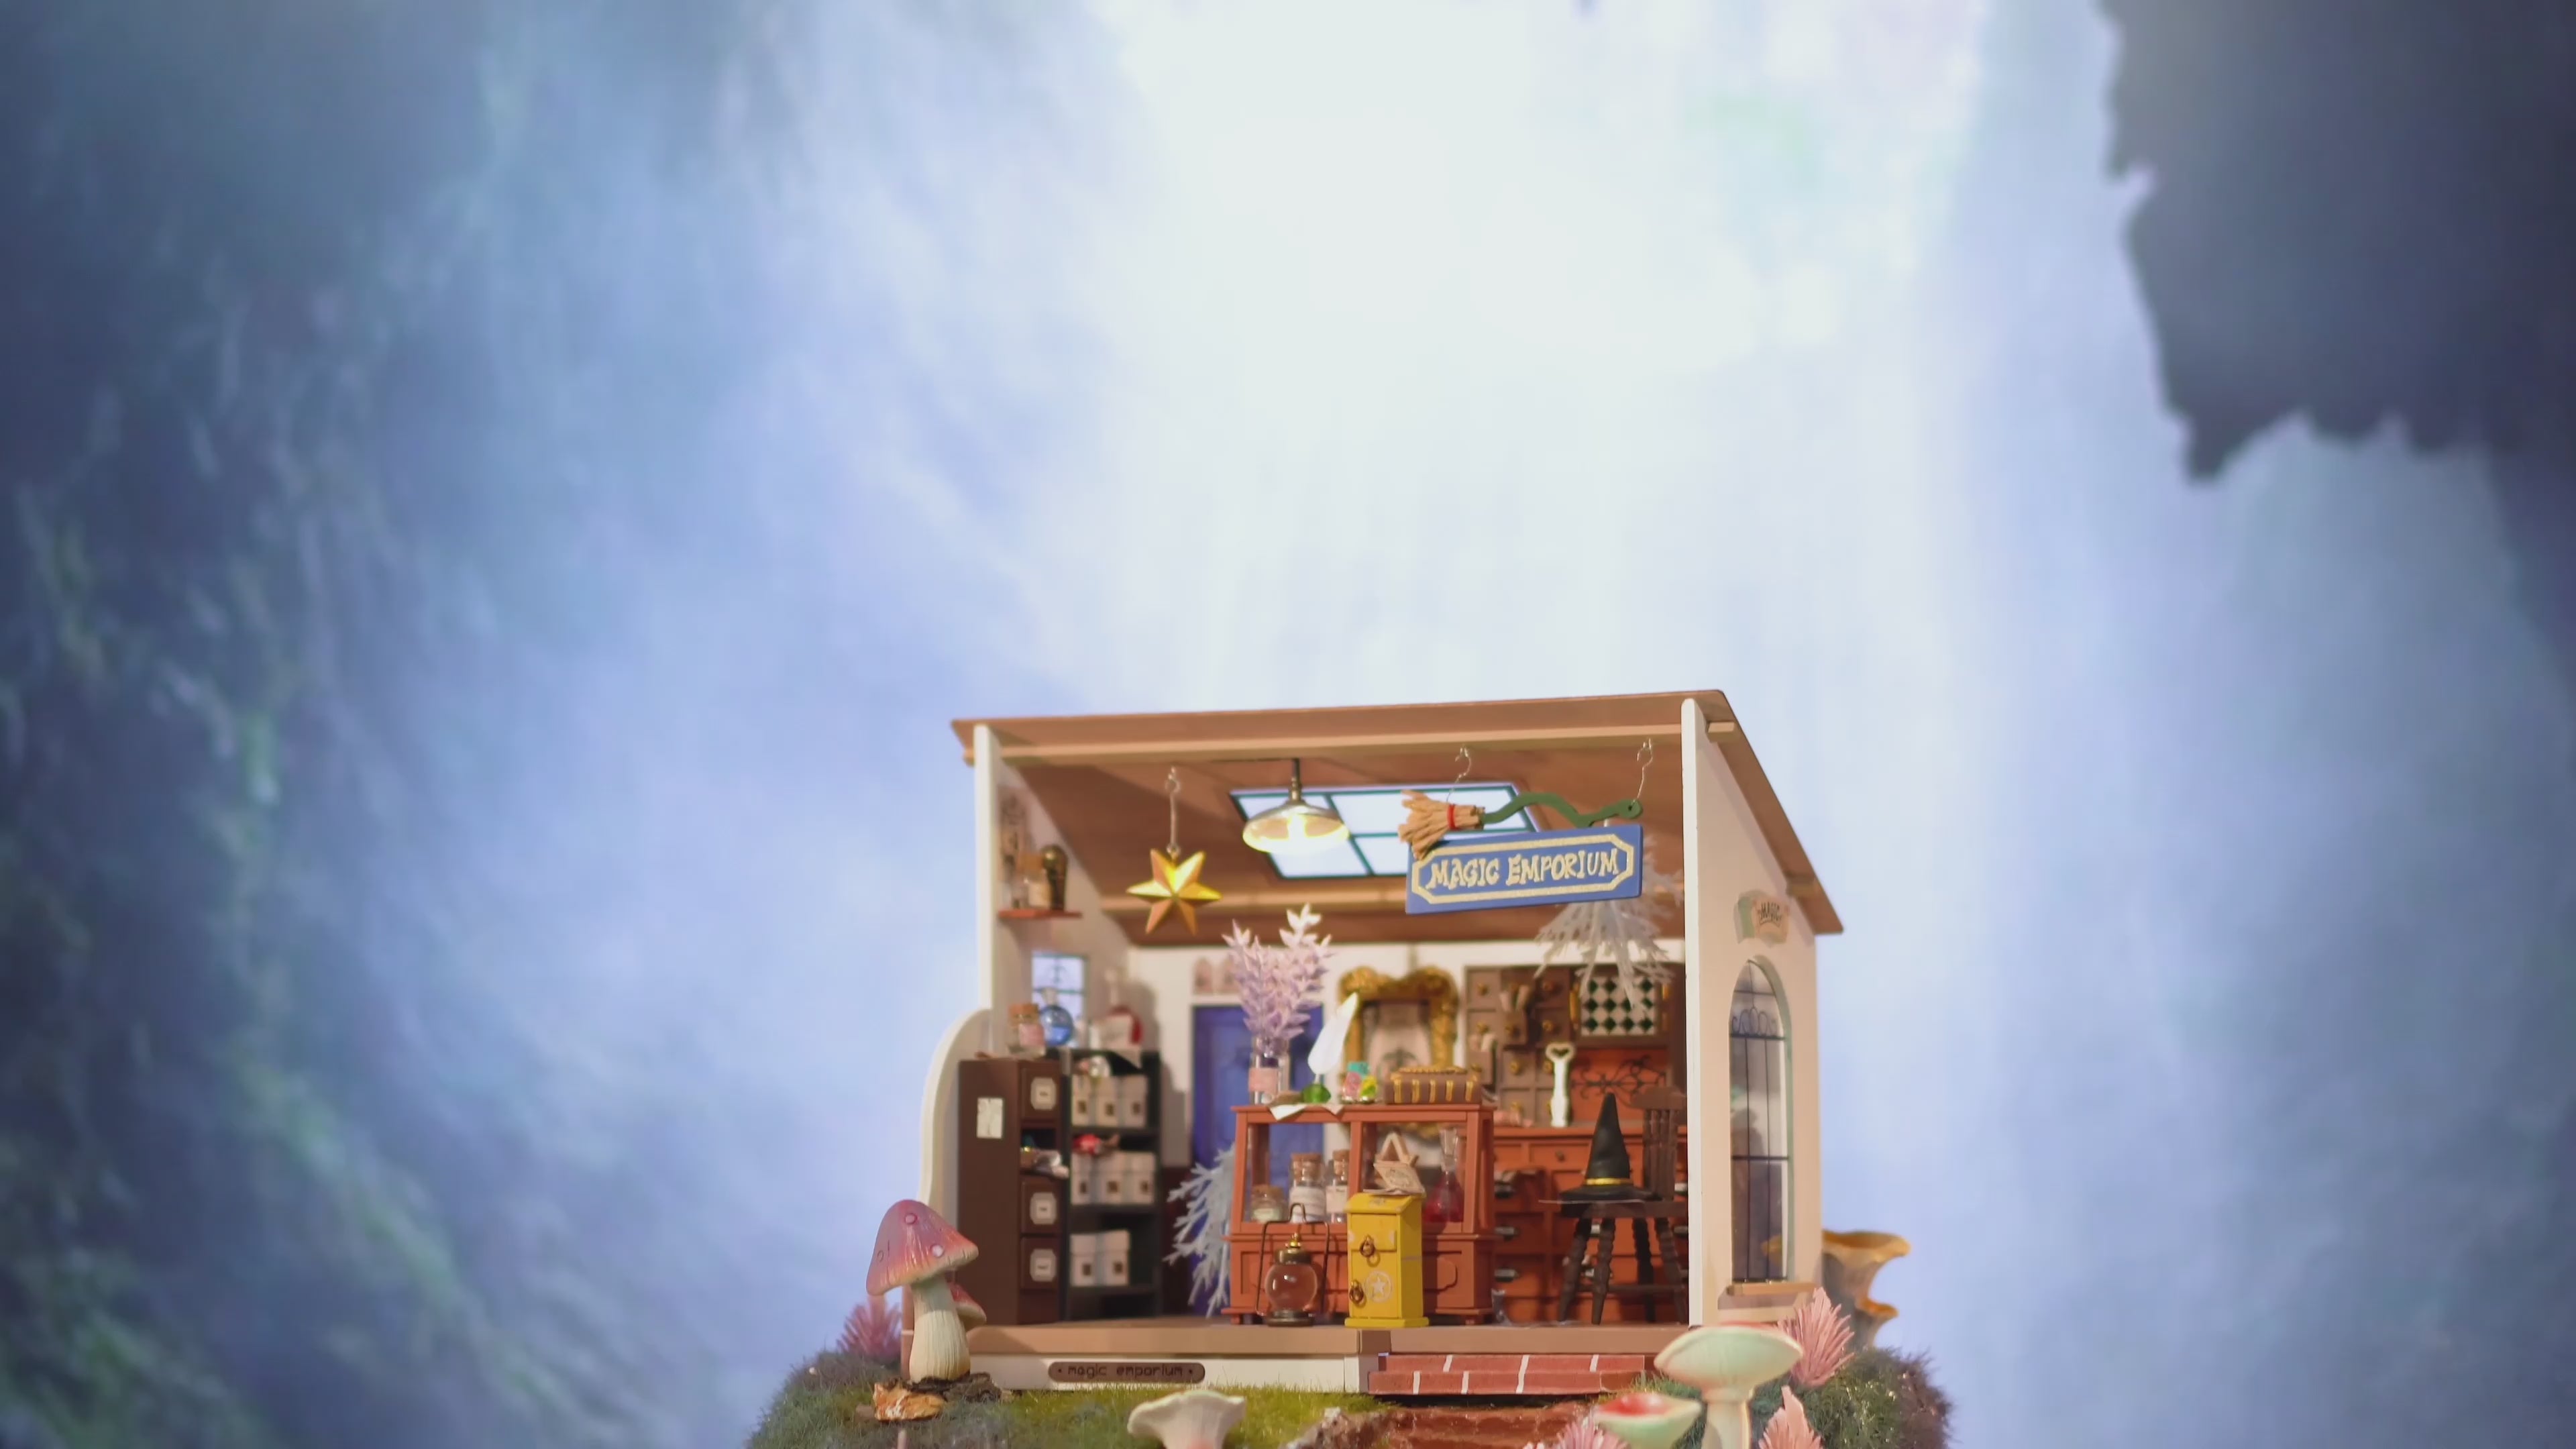 Robotime Rolife Kiki's Magic Emporium DIY Miniature House 3D Wooden Puzzle  Kit